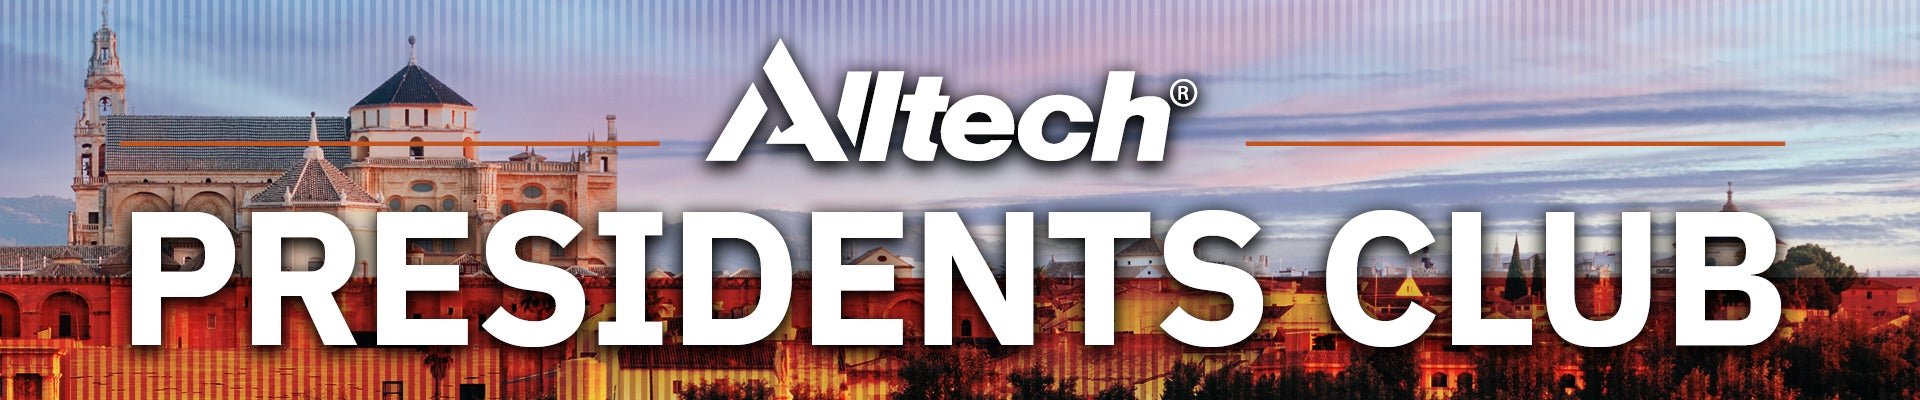 Alltech Presidents Club Spain Website Header